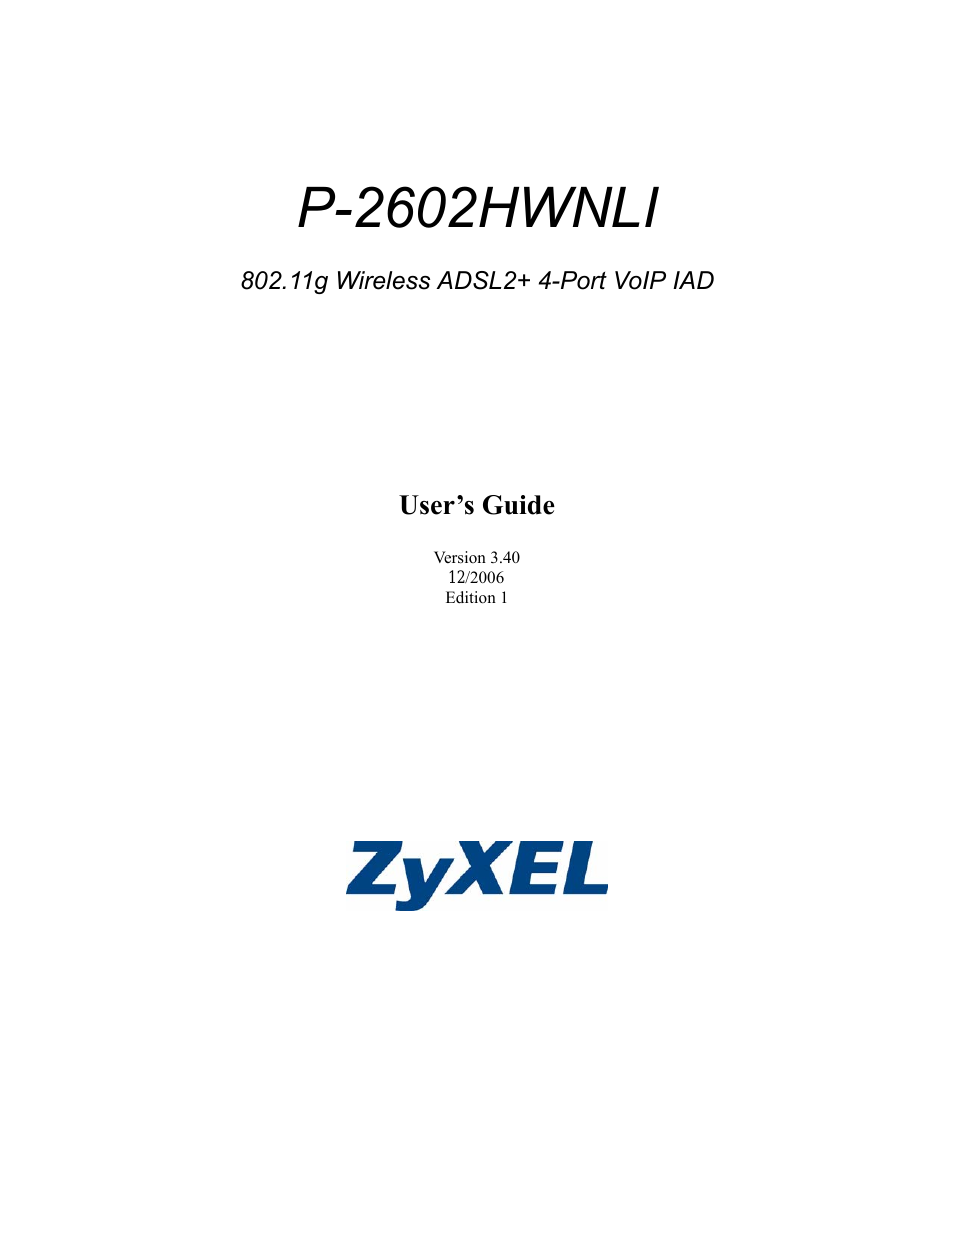 802.11g Wireless ADSL2+ 4-port VoIP IAD P-2602HWNLI